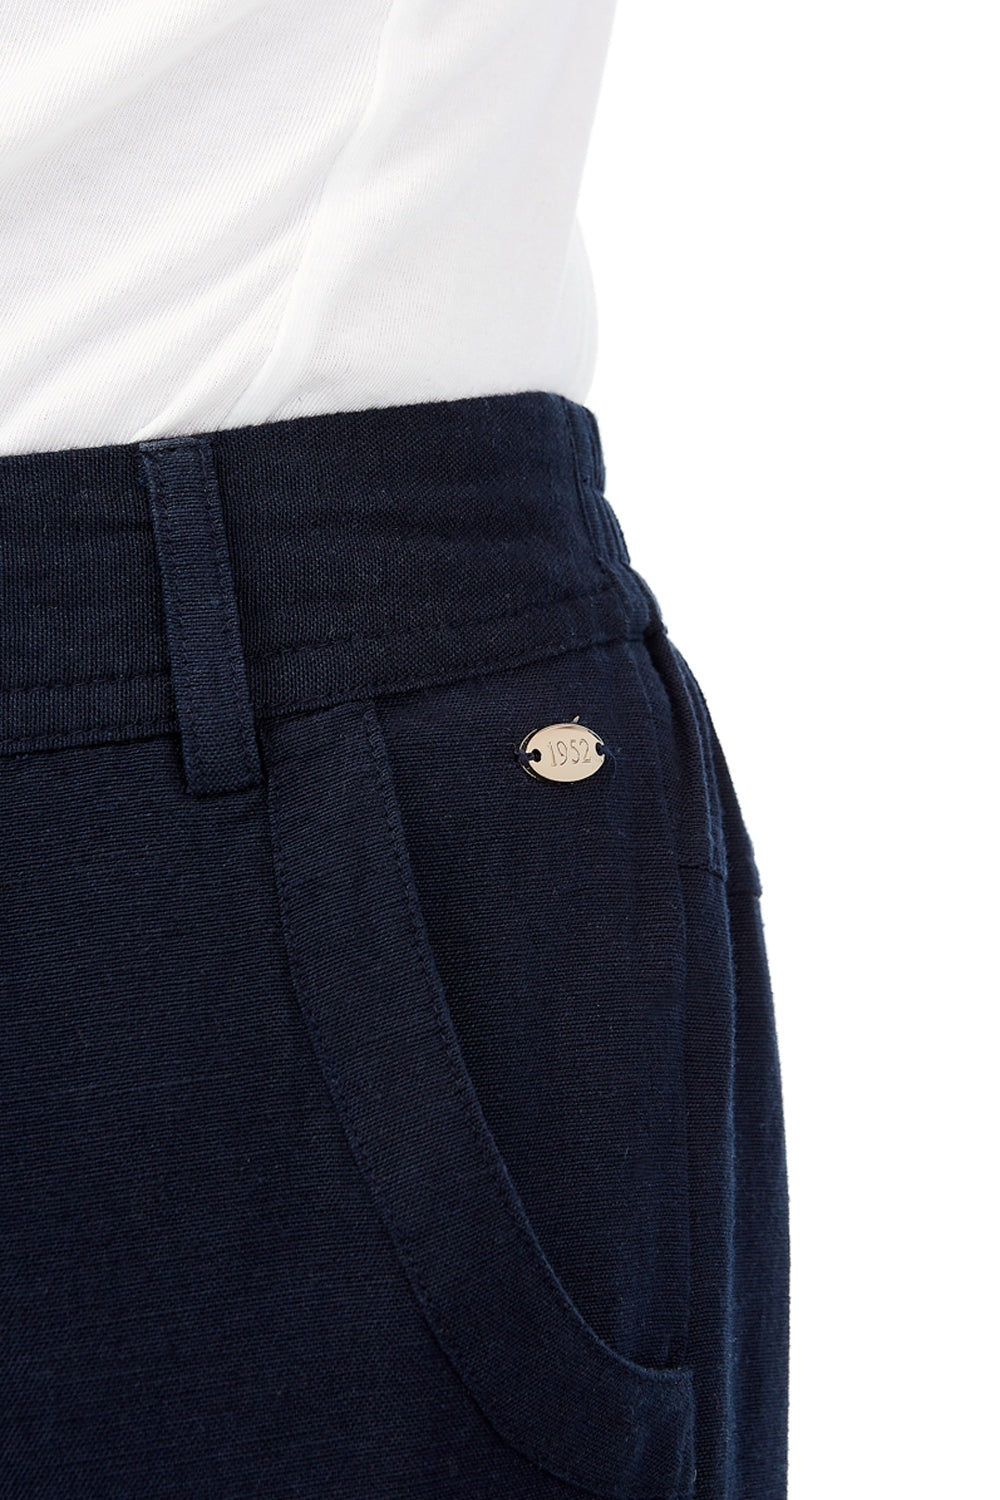 Tigiwear Linen Blend Navy Trousers 4 Shaws Department Stores